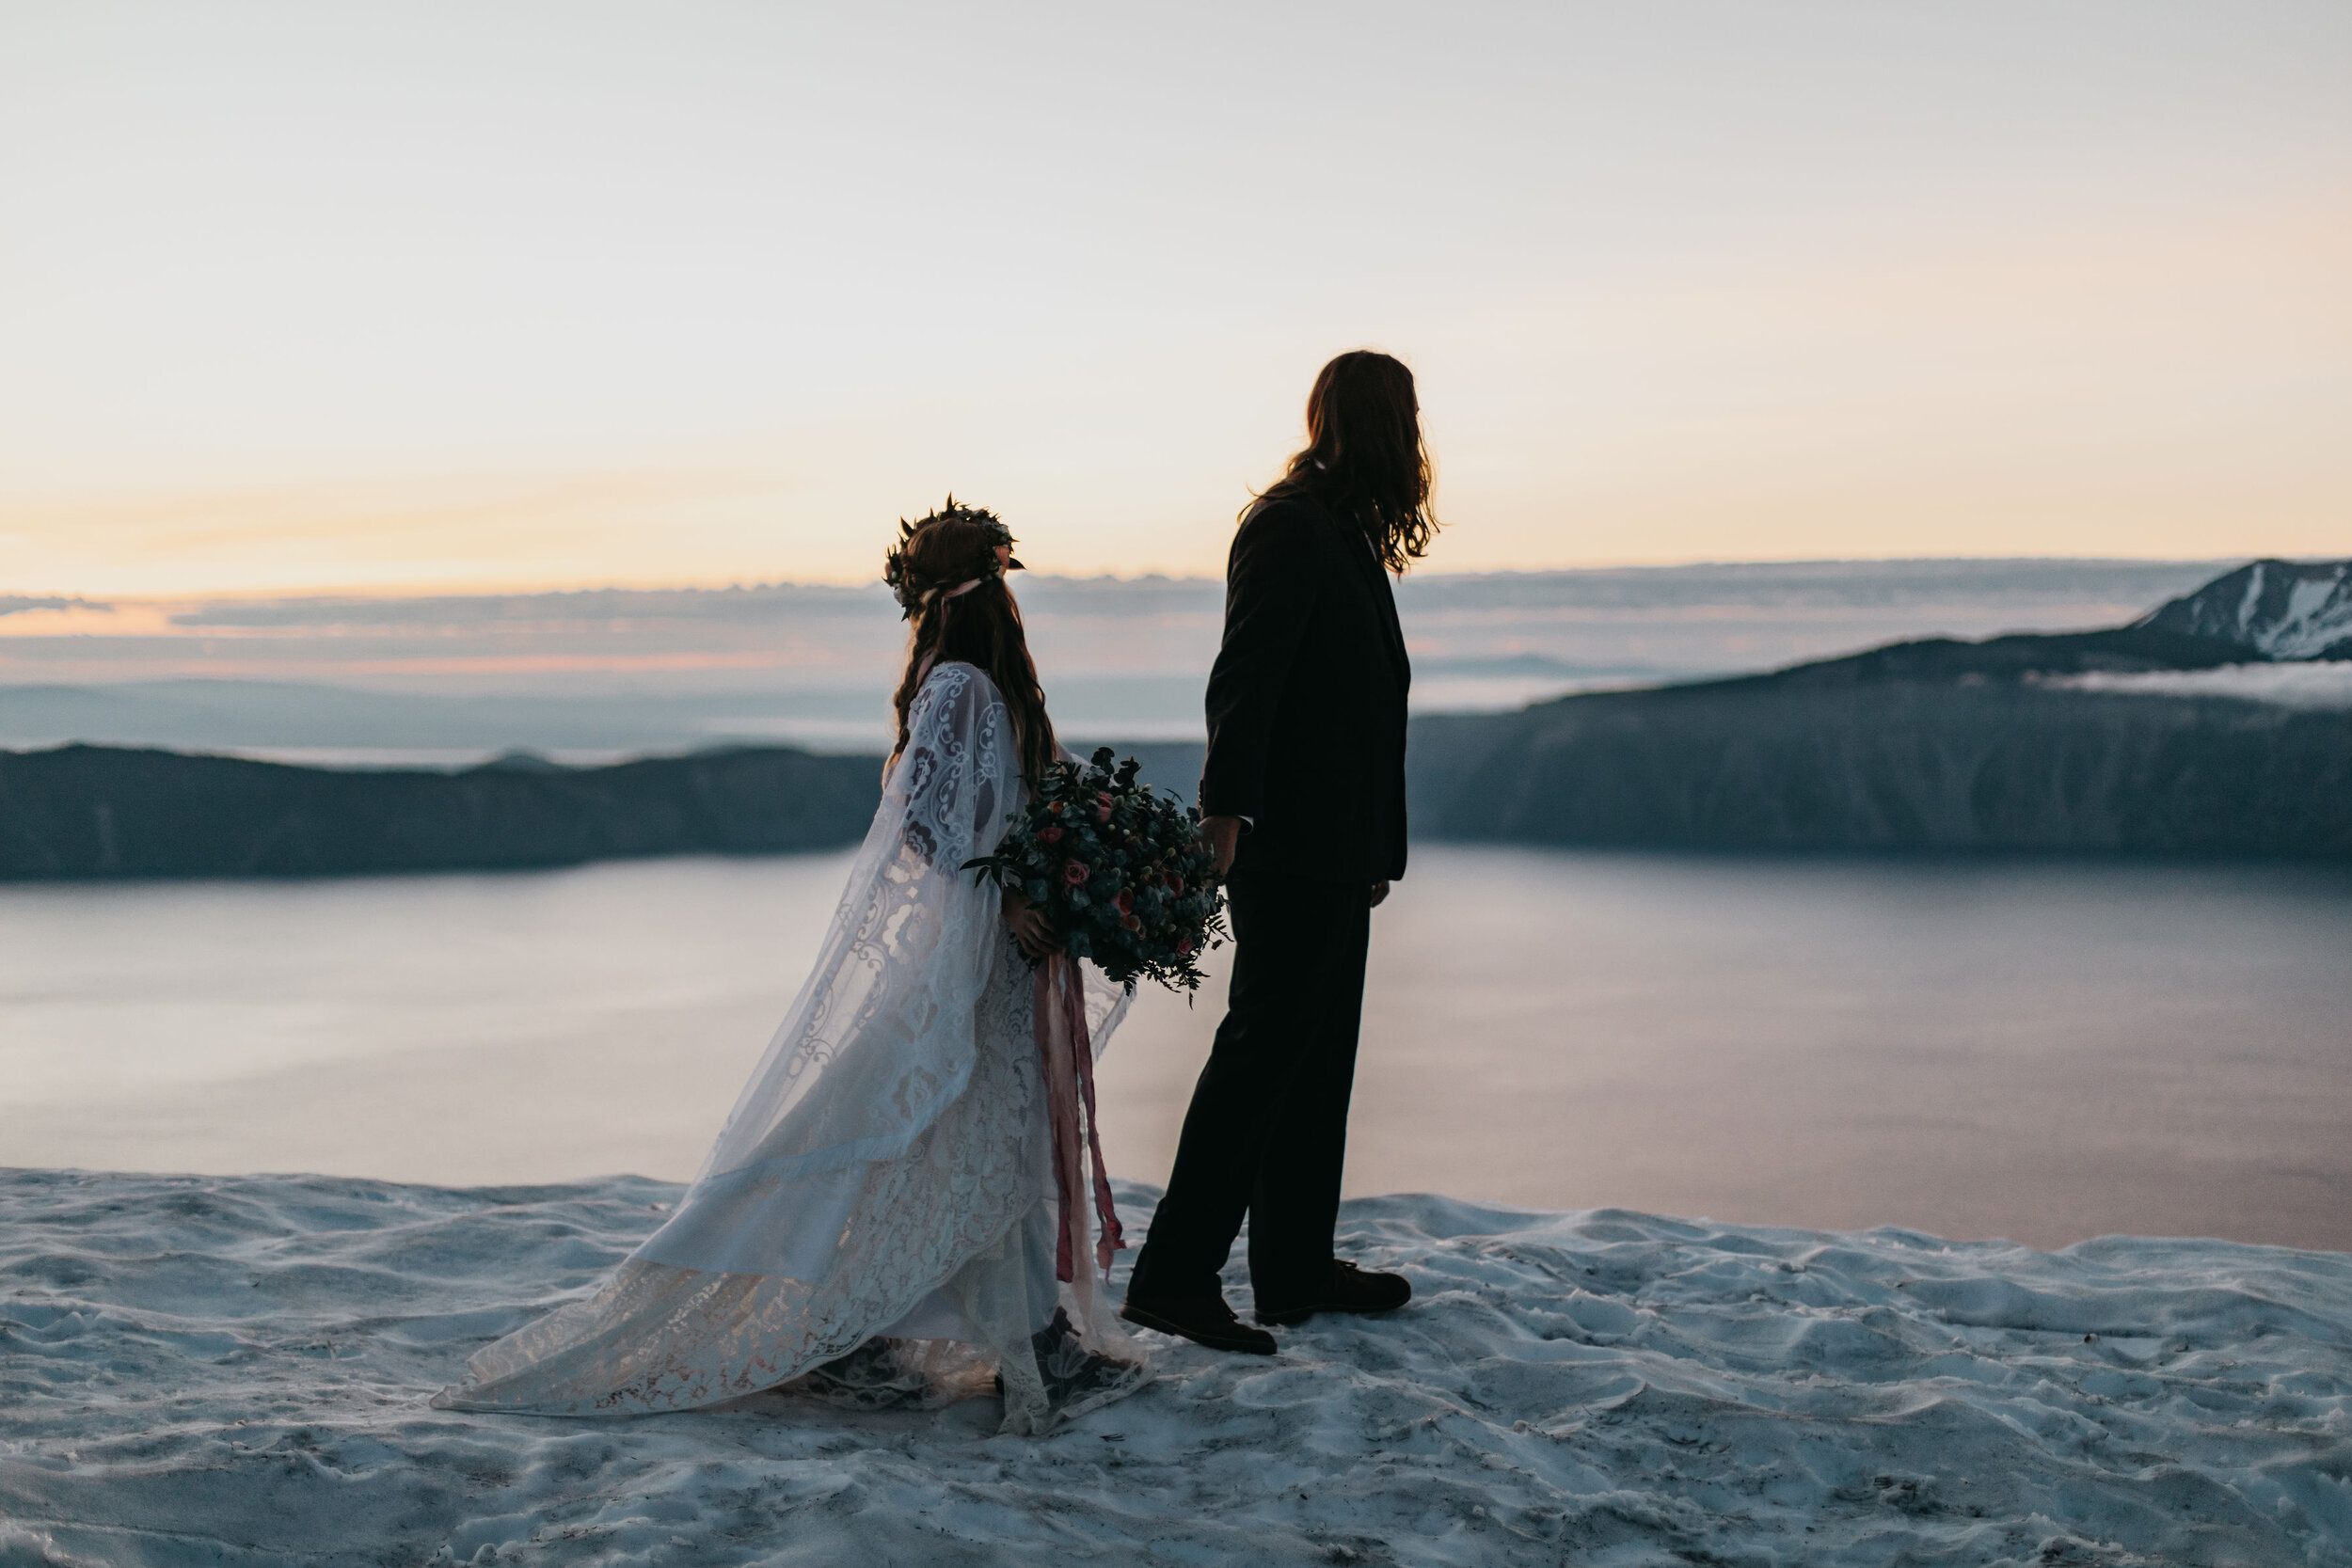 Portland, Oregon Wedding &amp; Elopement Photography/Videography team Christina &amp; Jeremiah